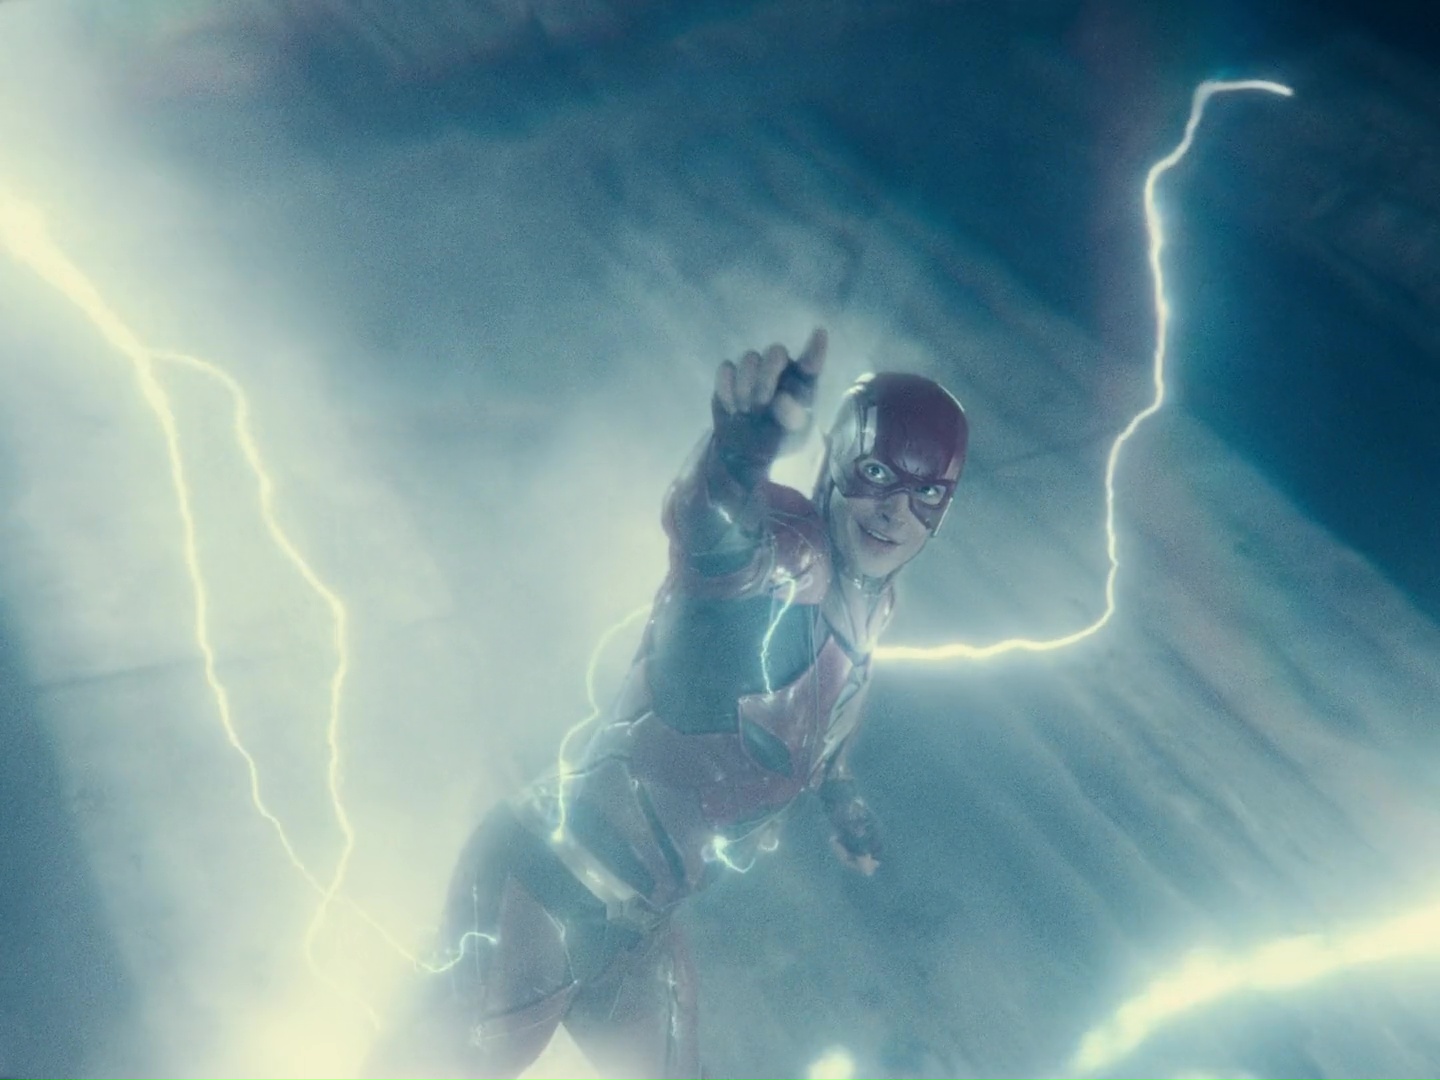 Justice League Wonder Woman Flash And Batman Wallpapers